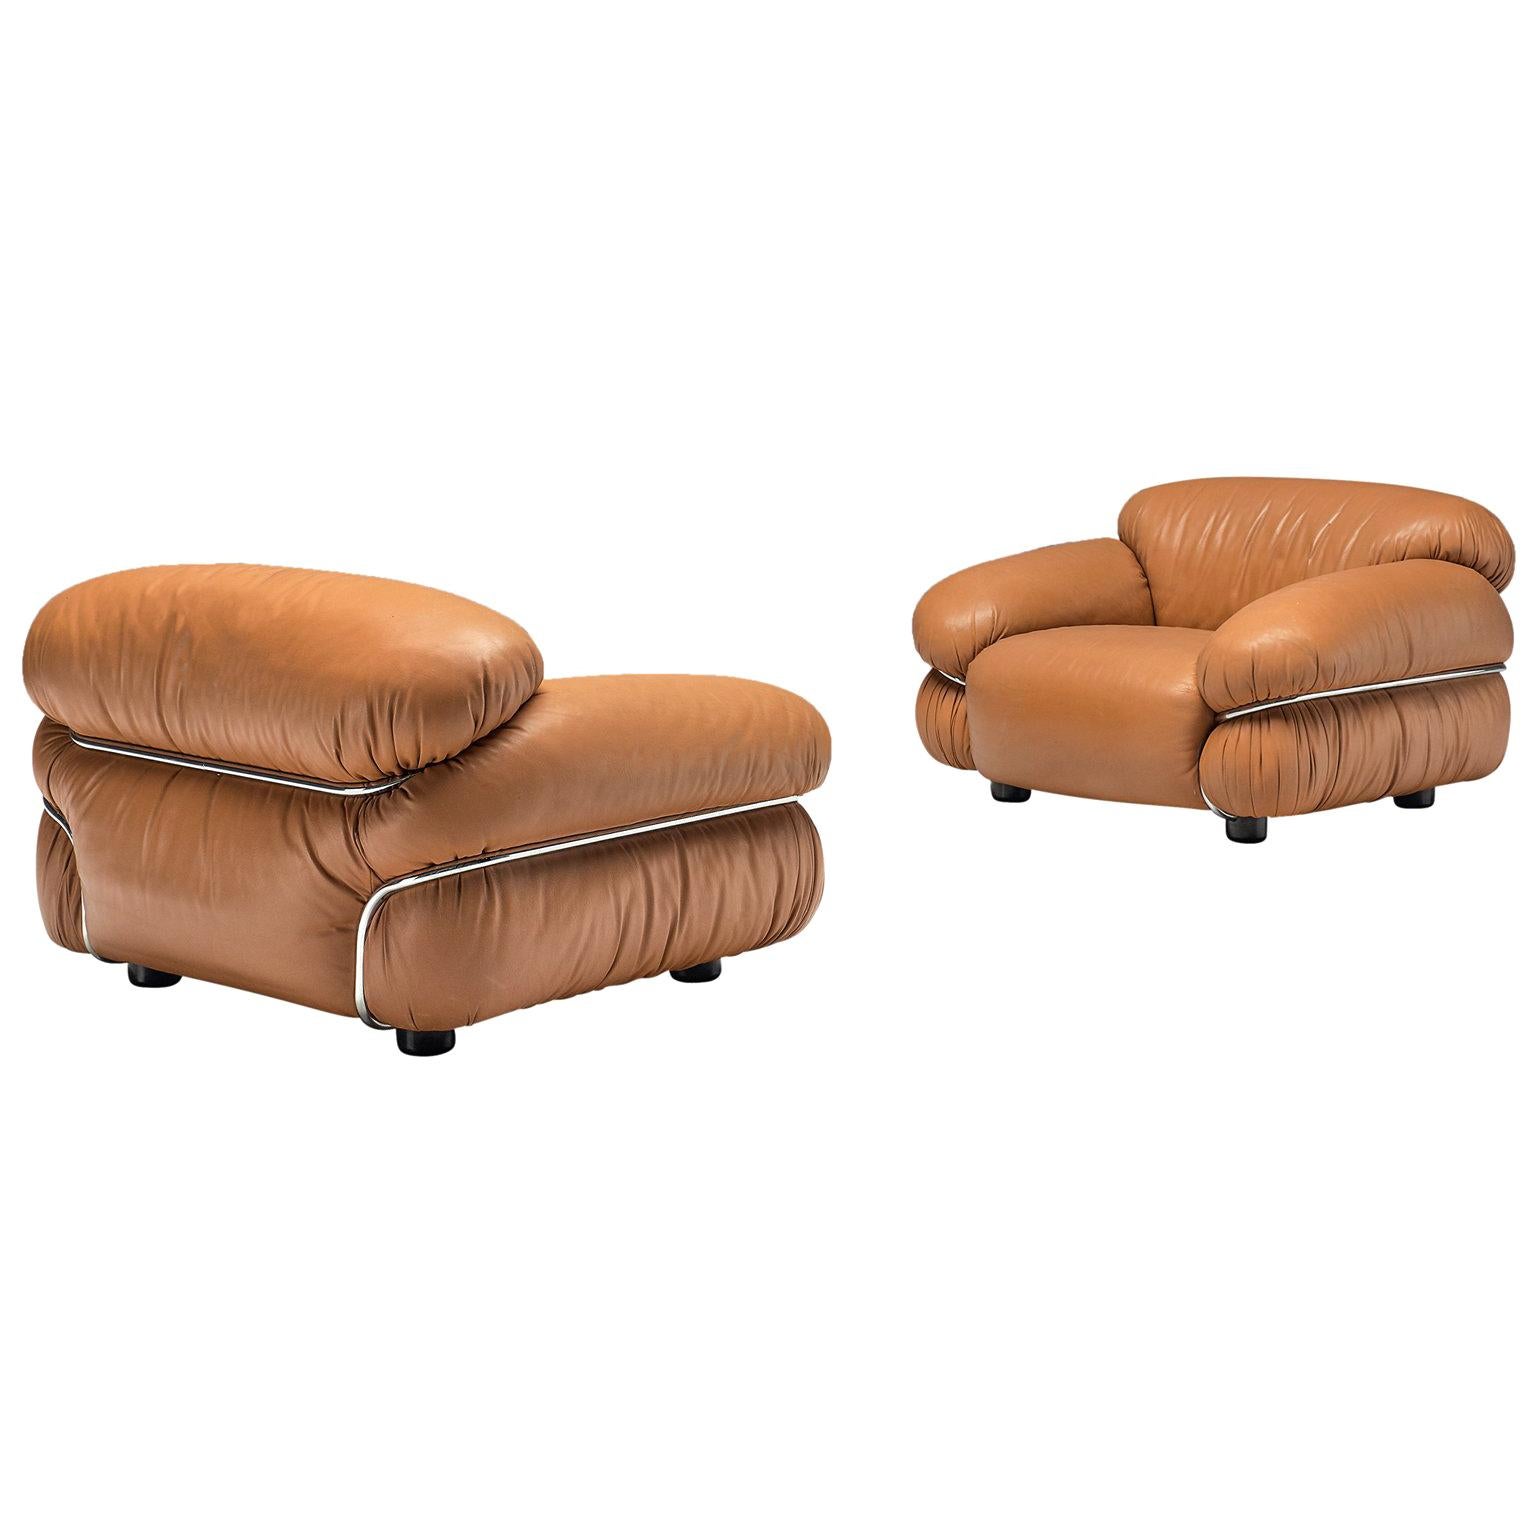 Gianfranco Frattini Pair of 'Sesann' Lounge Chairs in Original Cognac Leather